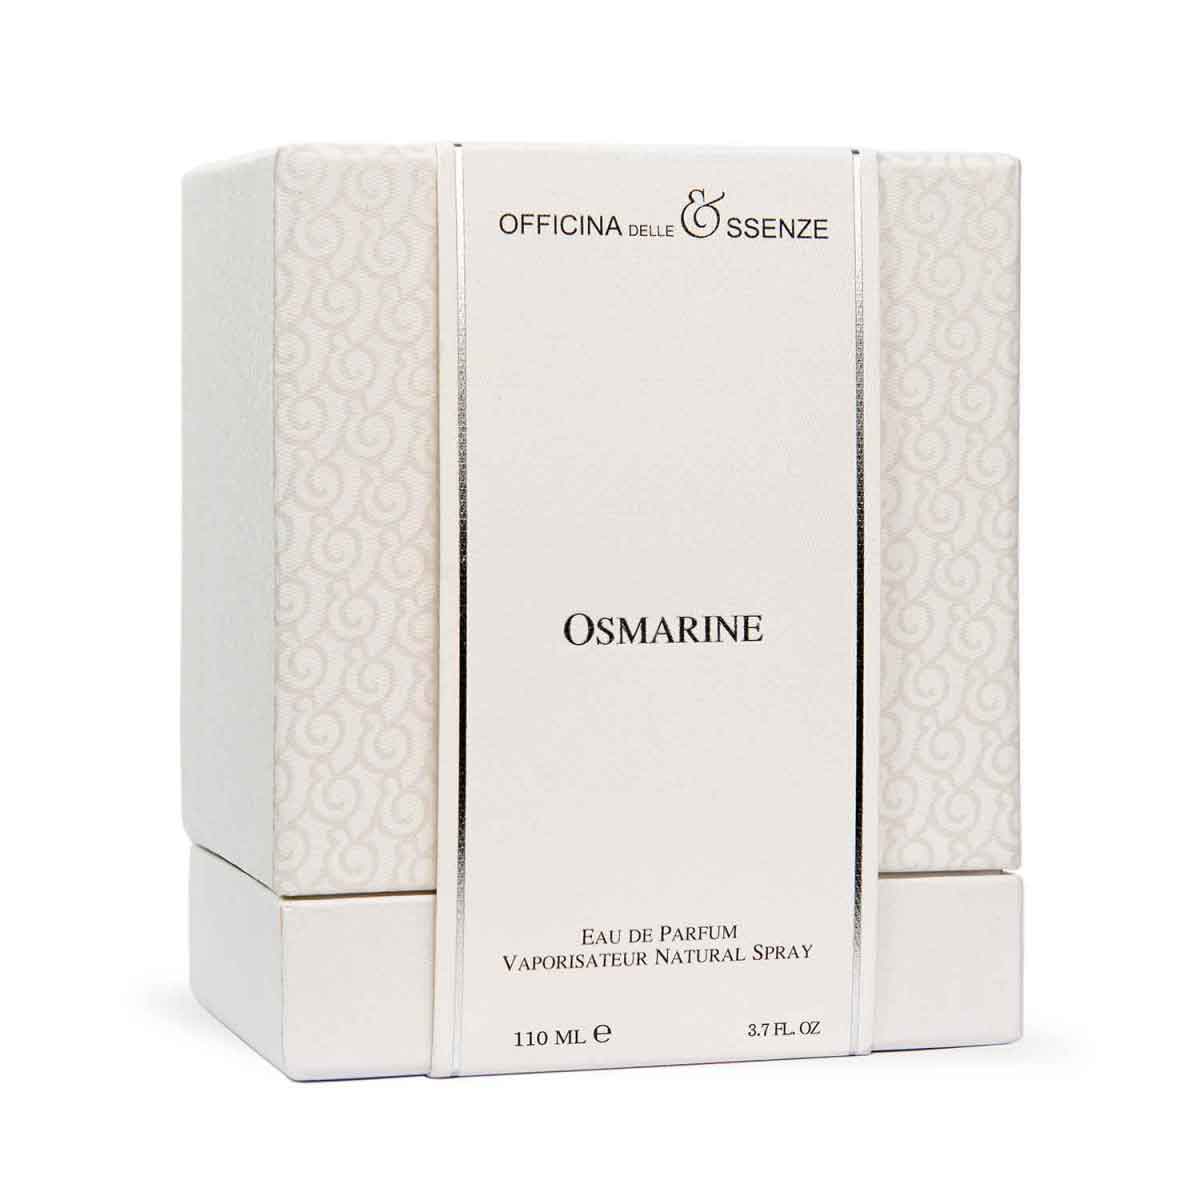 Eau de Parfum package Osmarine